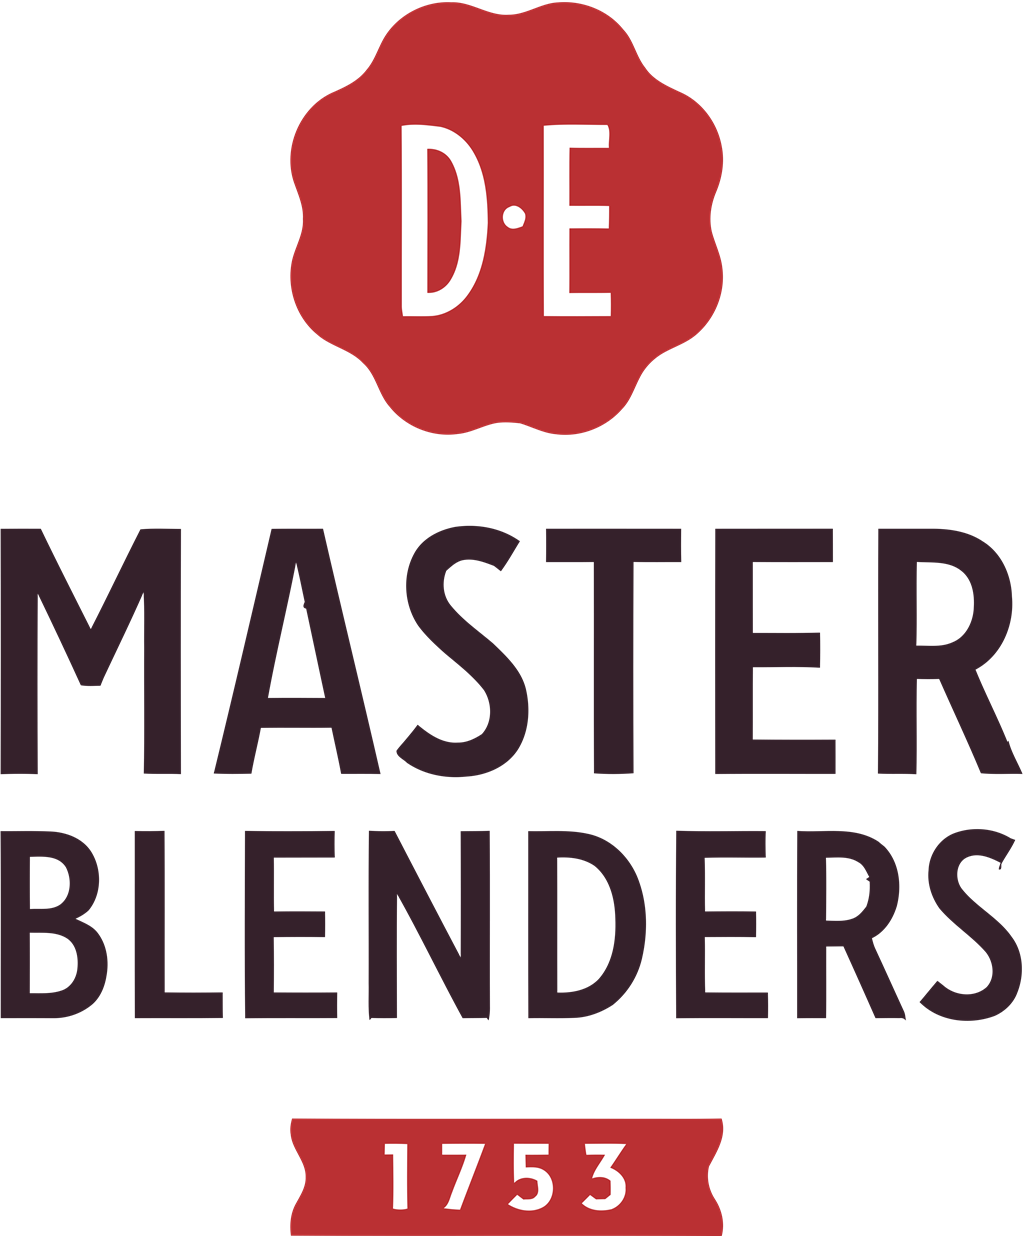 D.E Master Blenders 1753 logotype, transparent .png, medium, large